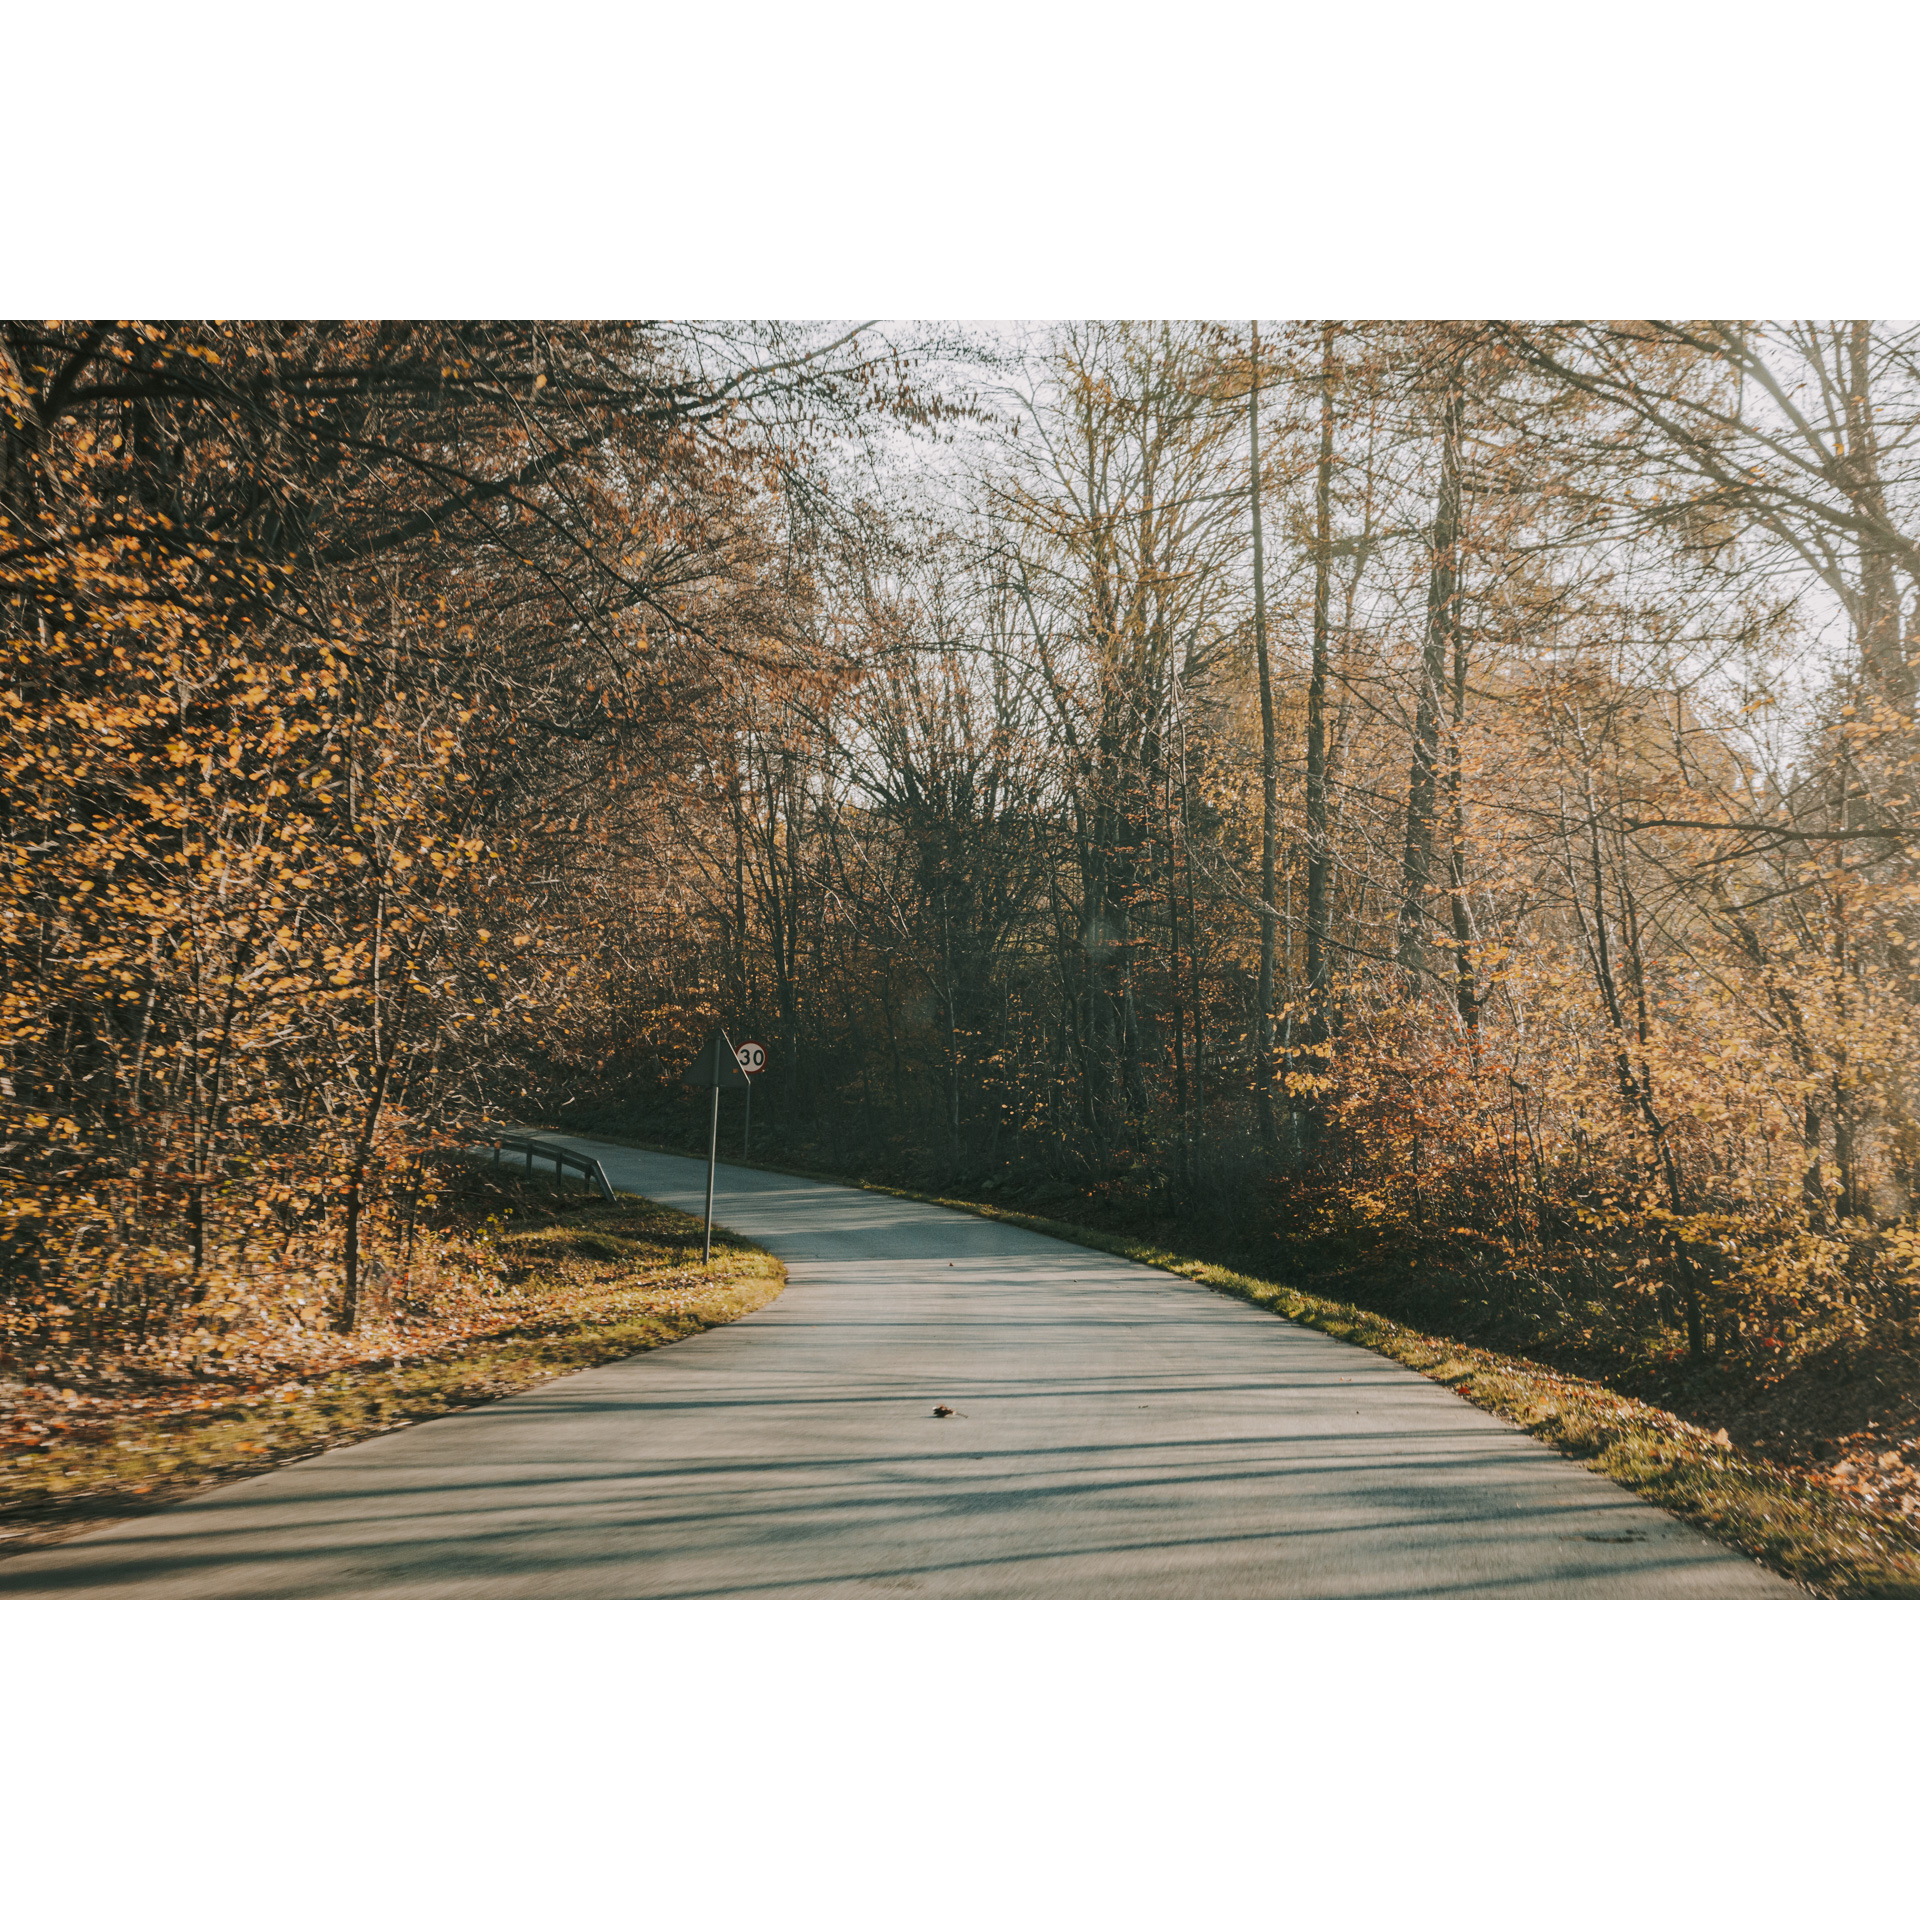 Asphalt road turning left among autumn leaves